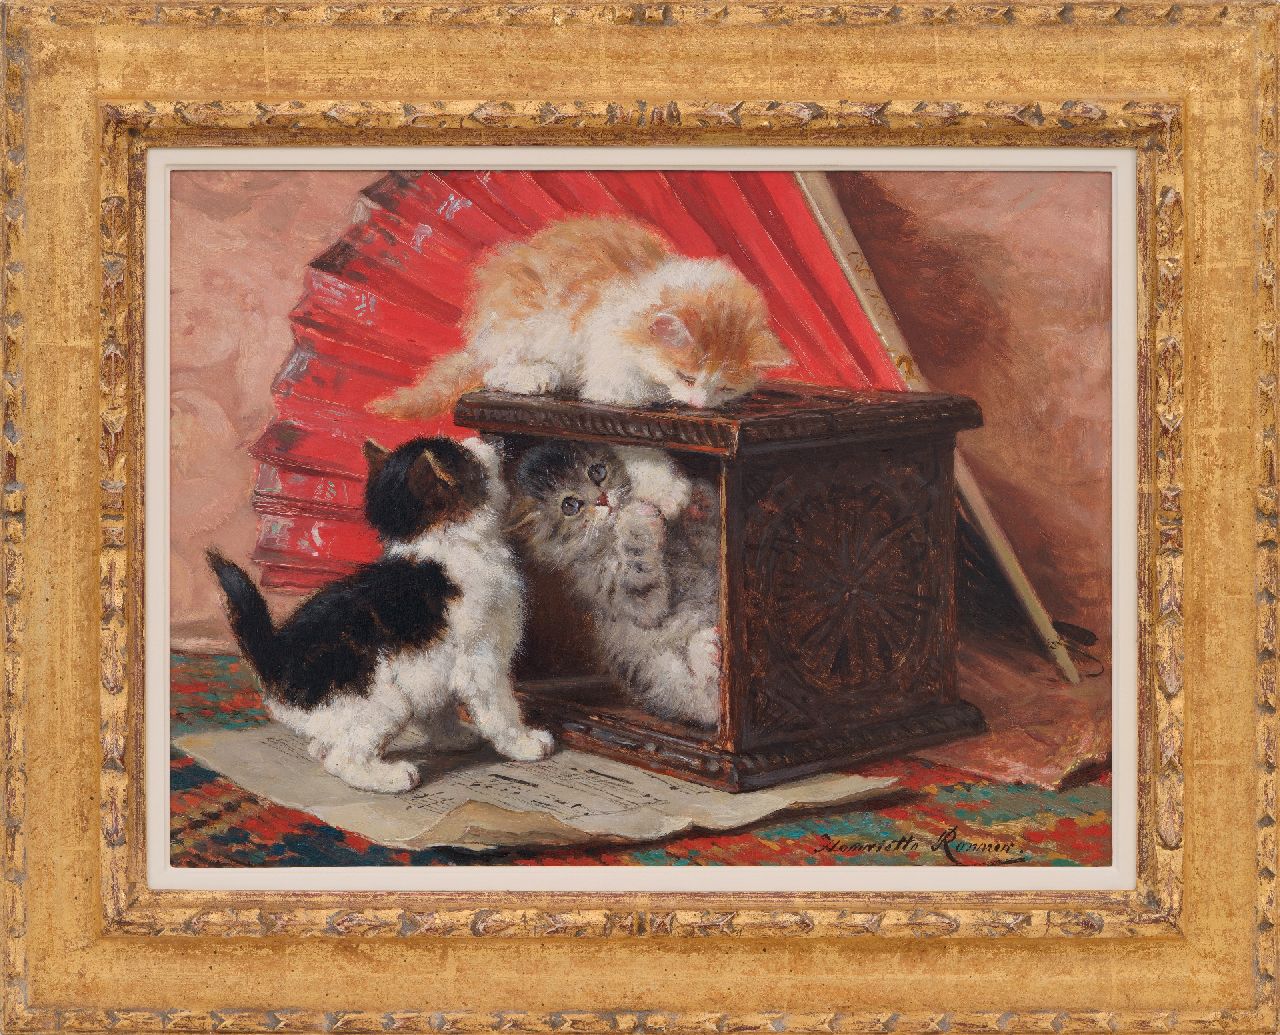 Ronner-Knip H.  | Henriette Ronner-Knip, Stilleven met drie spelende kittens, olieverf op paneel 33,3 x 44,7 cm, gesigneerd rechtsonder